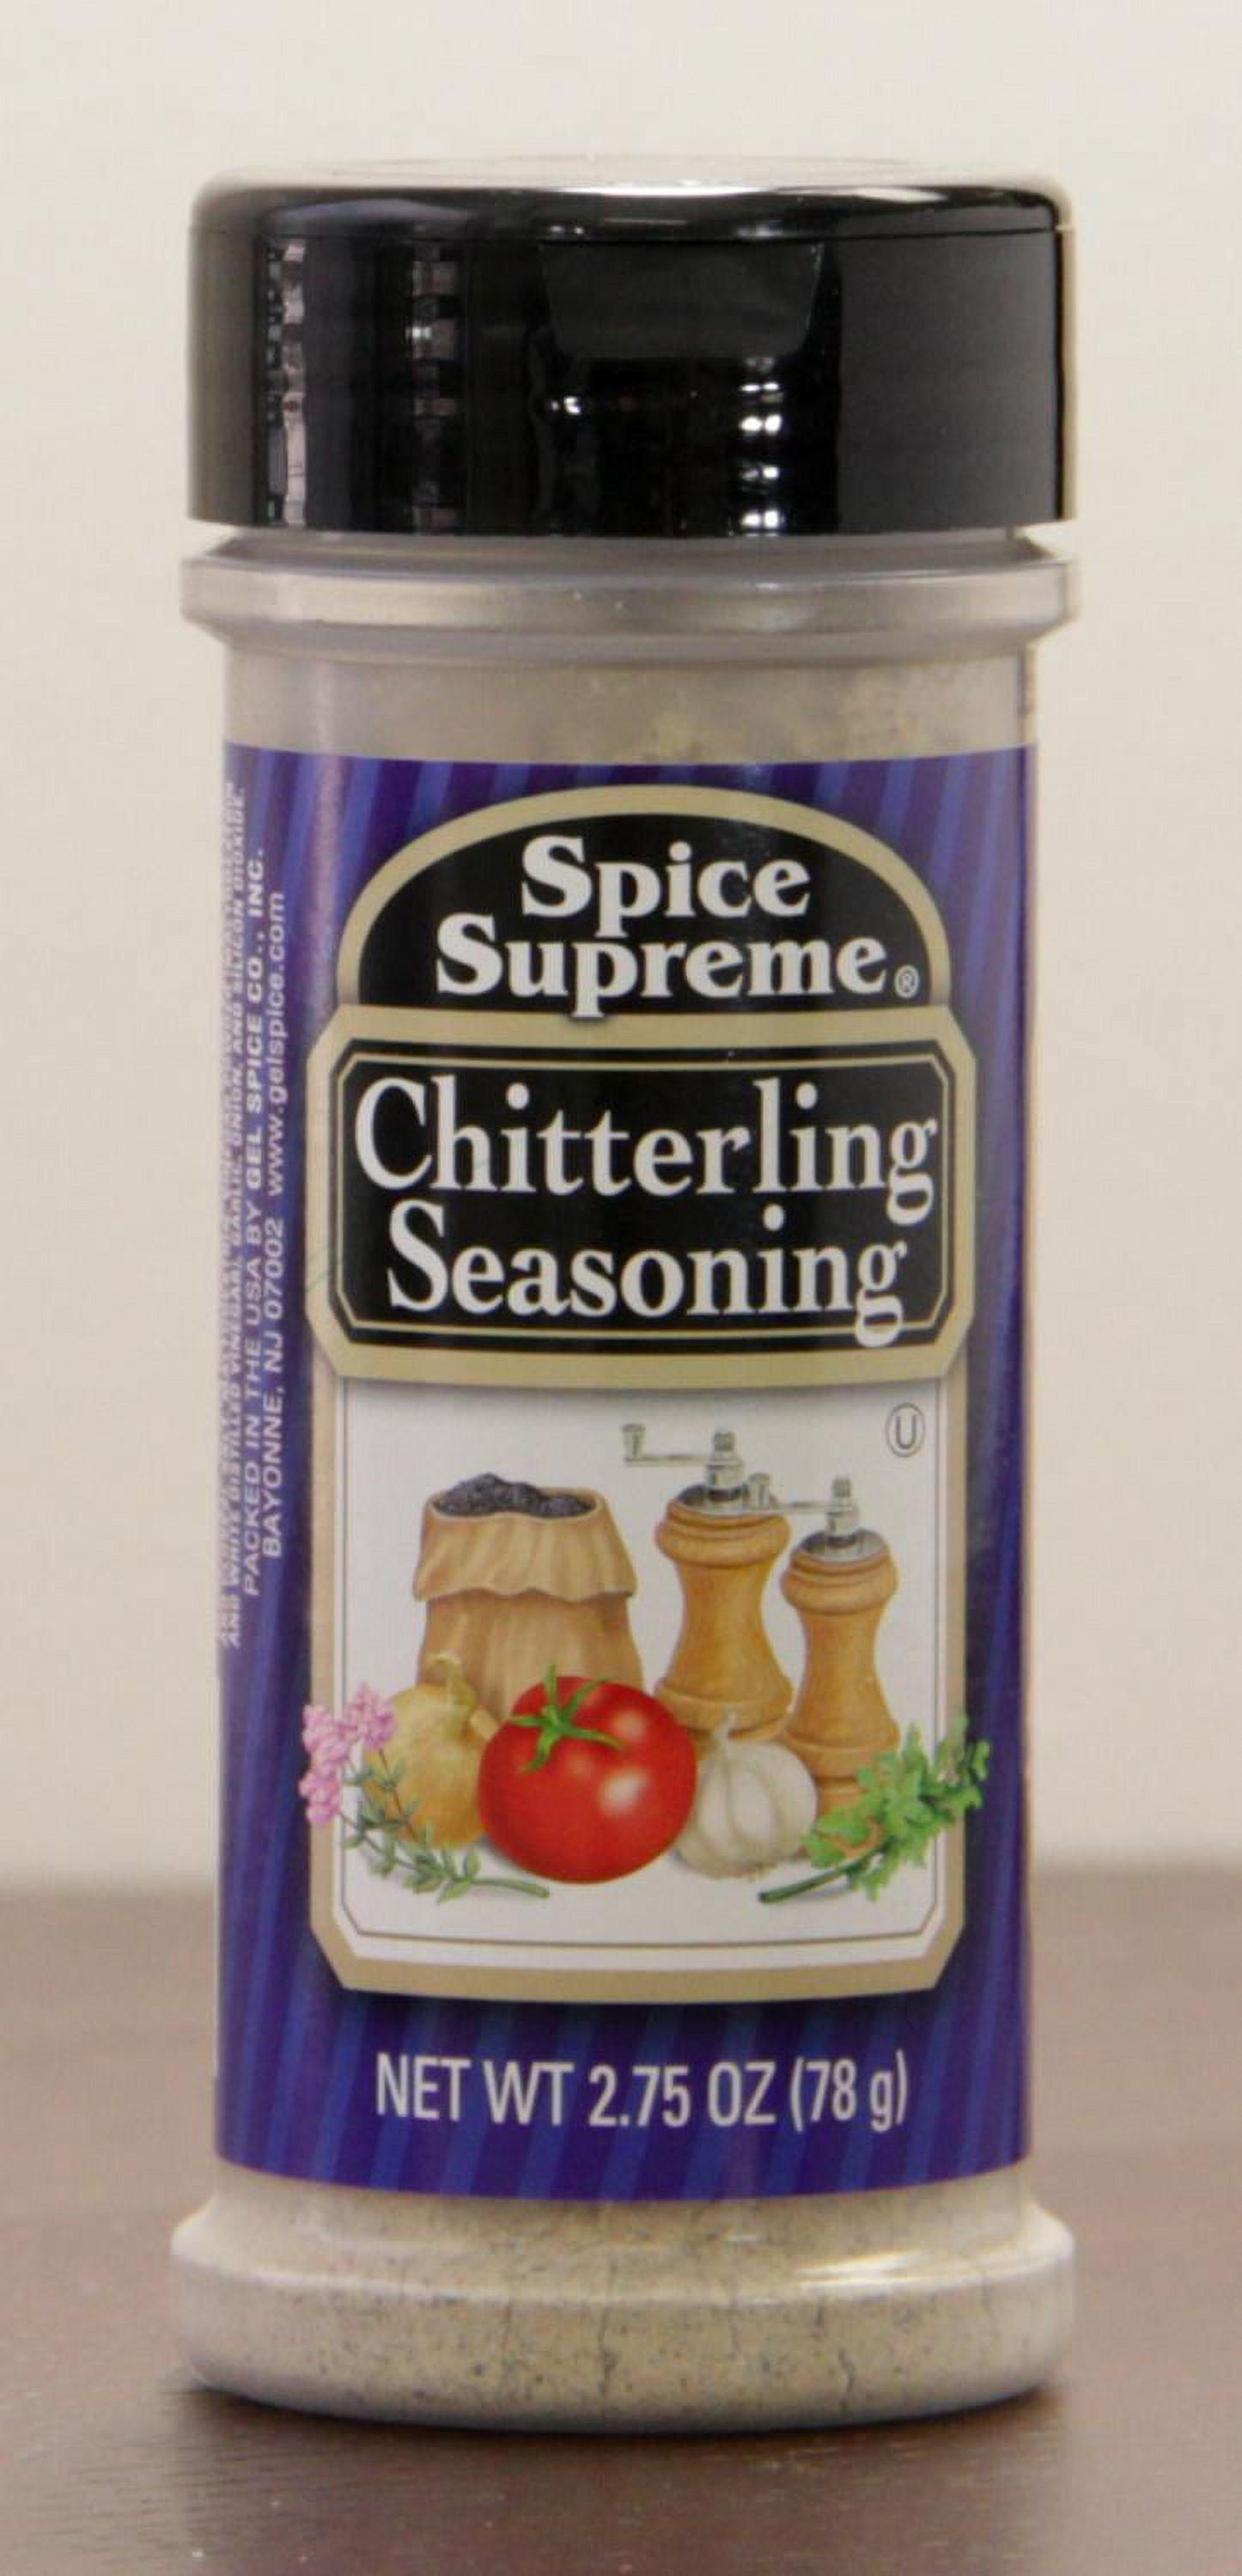 Spice Supreme SOUL FOOD, GREENS, CHITTERLING SEASONING COOKING